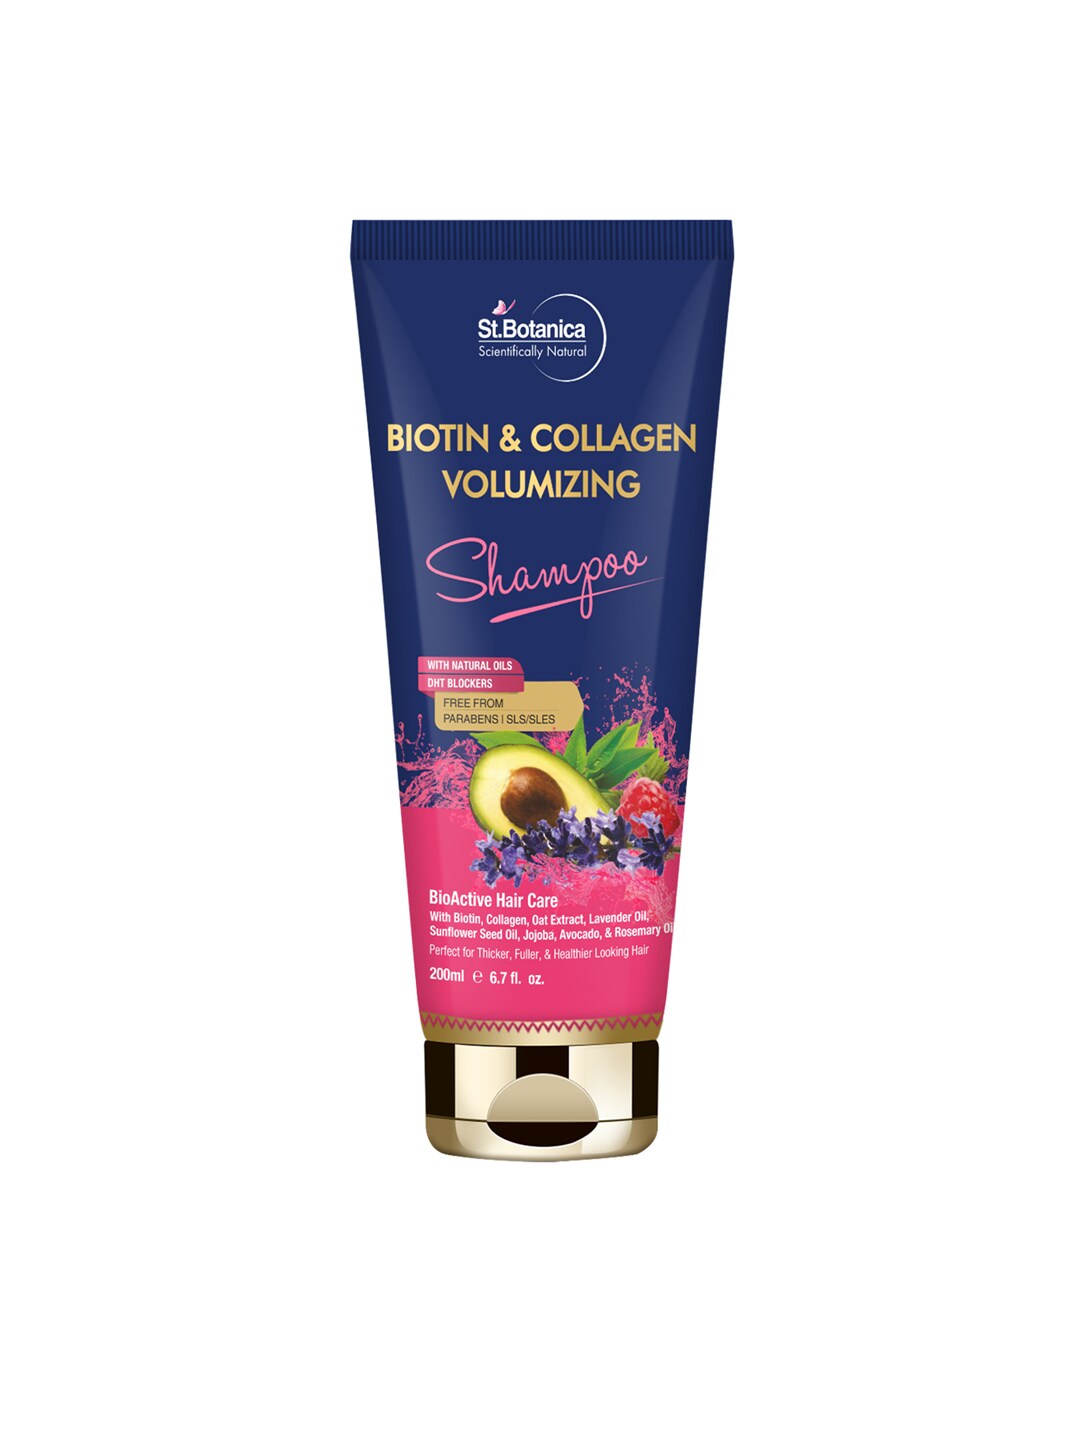 St.Botanica Unisex Biotin & Collagen Volumizing Hair Shampoo 200 ml Price in India